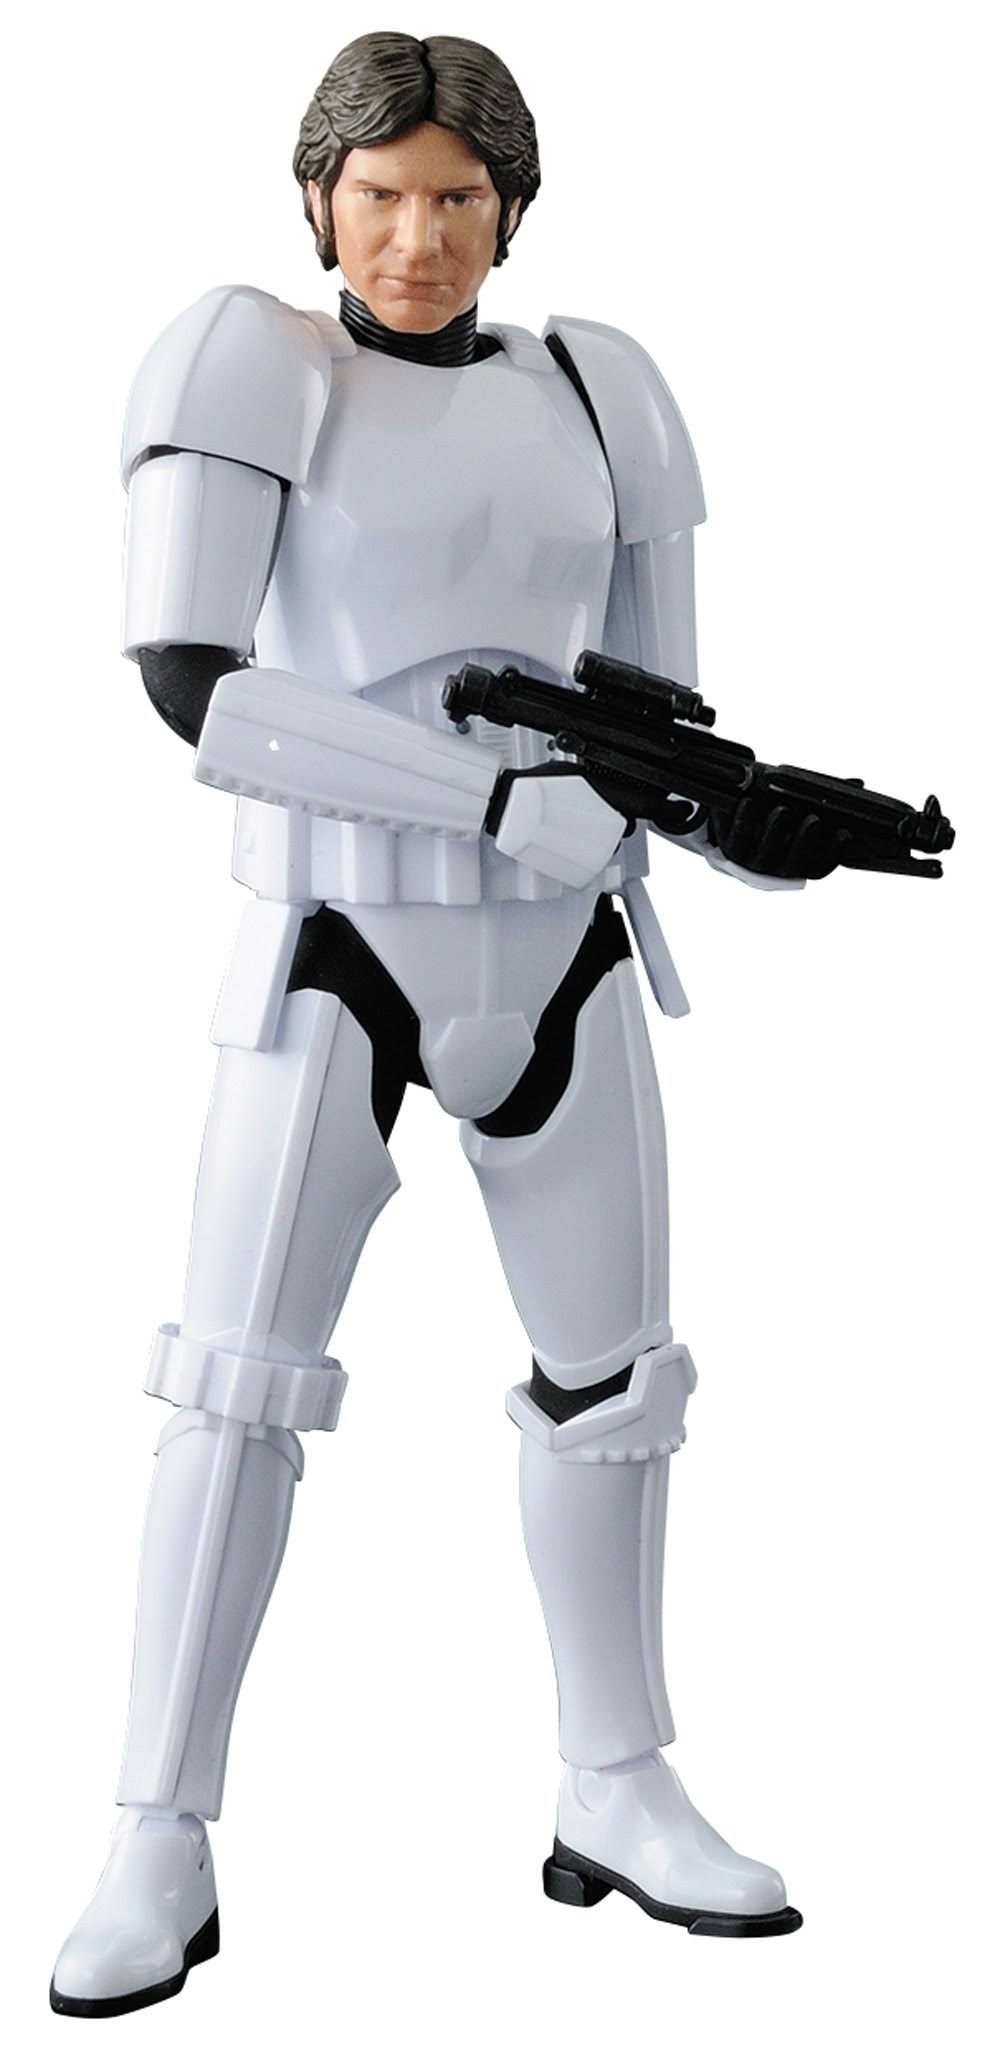 1/12 Han Solo Stormtrooper Ver., Star Wars